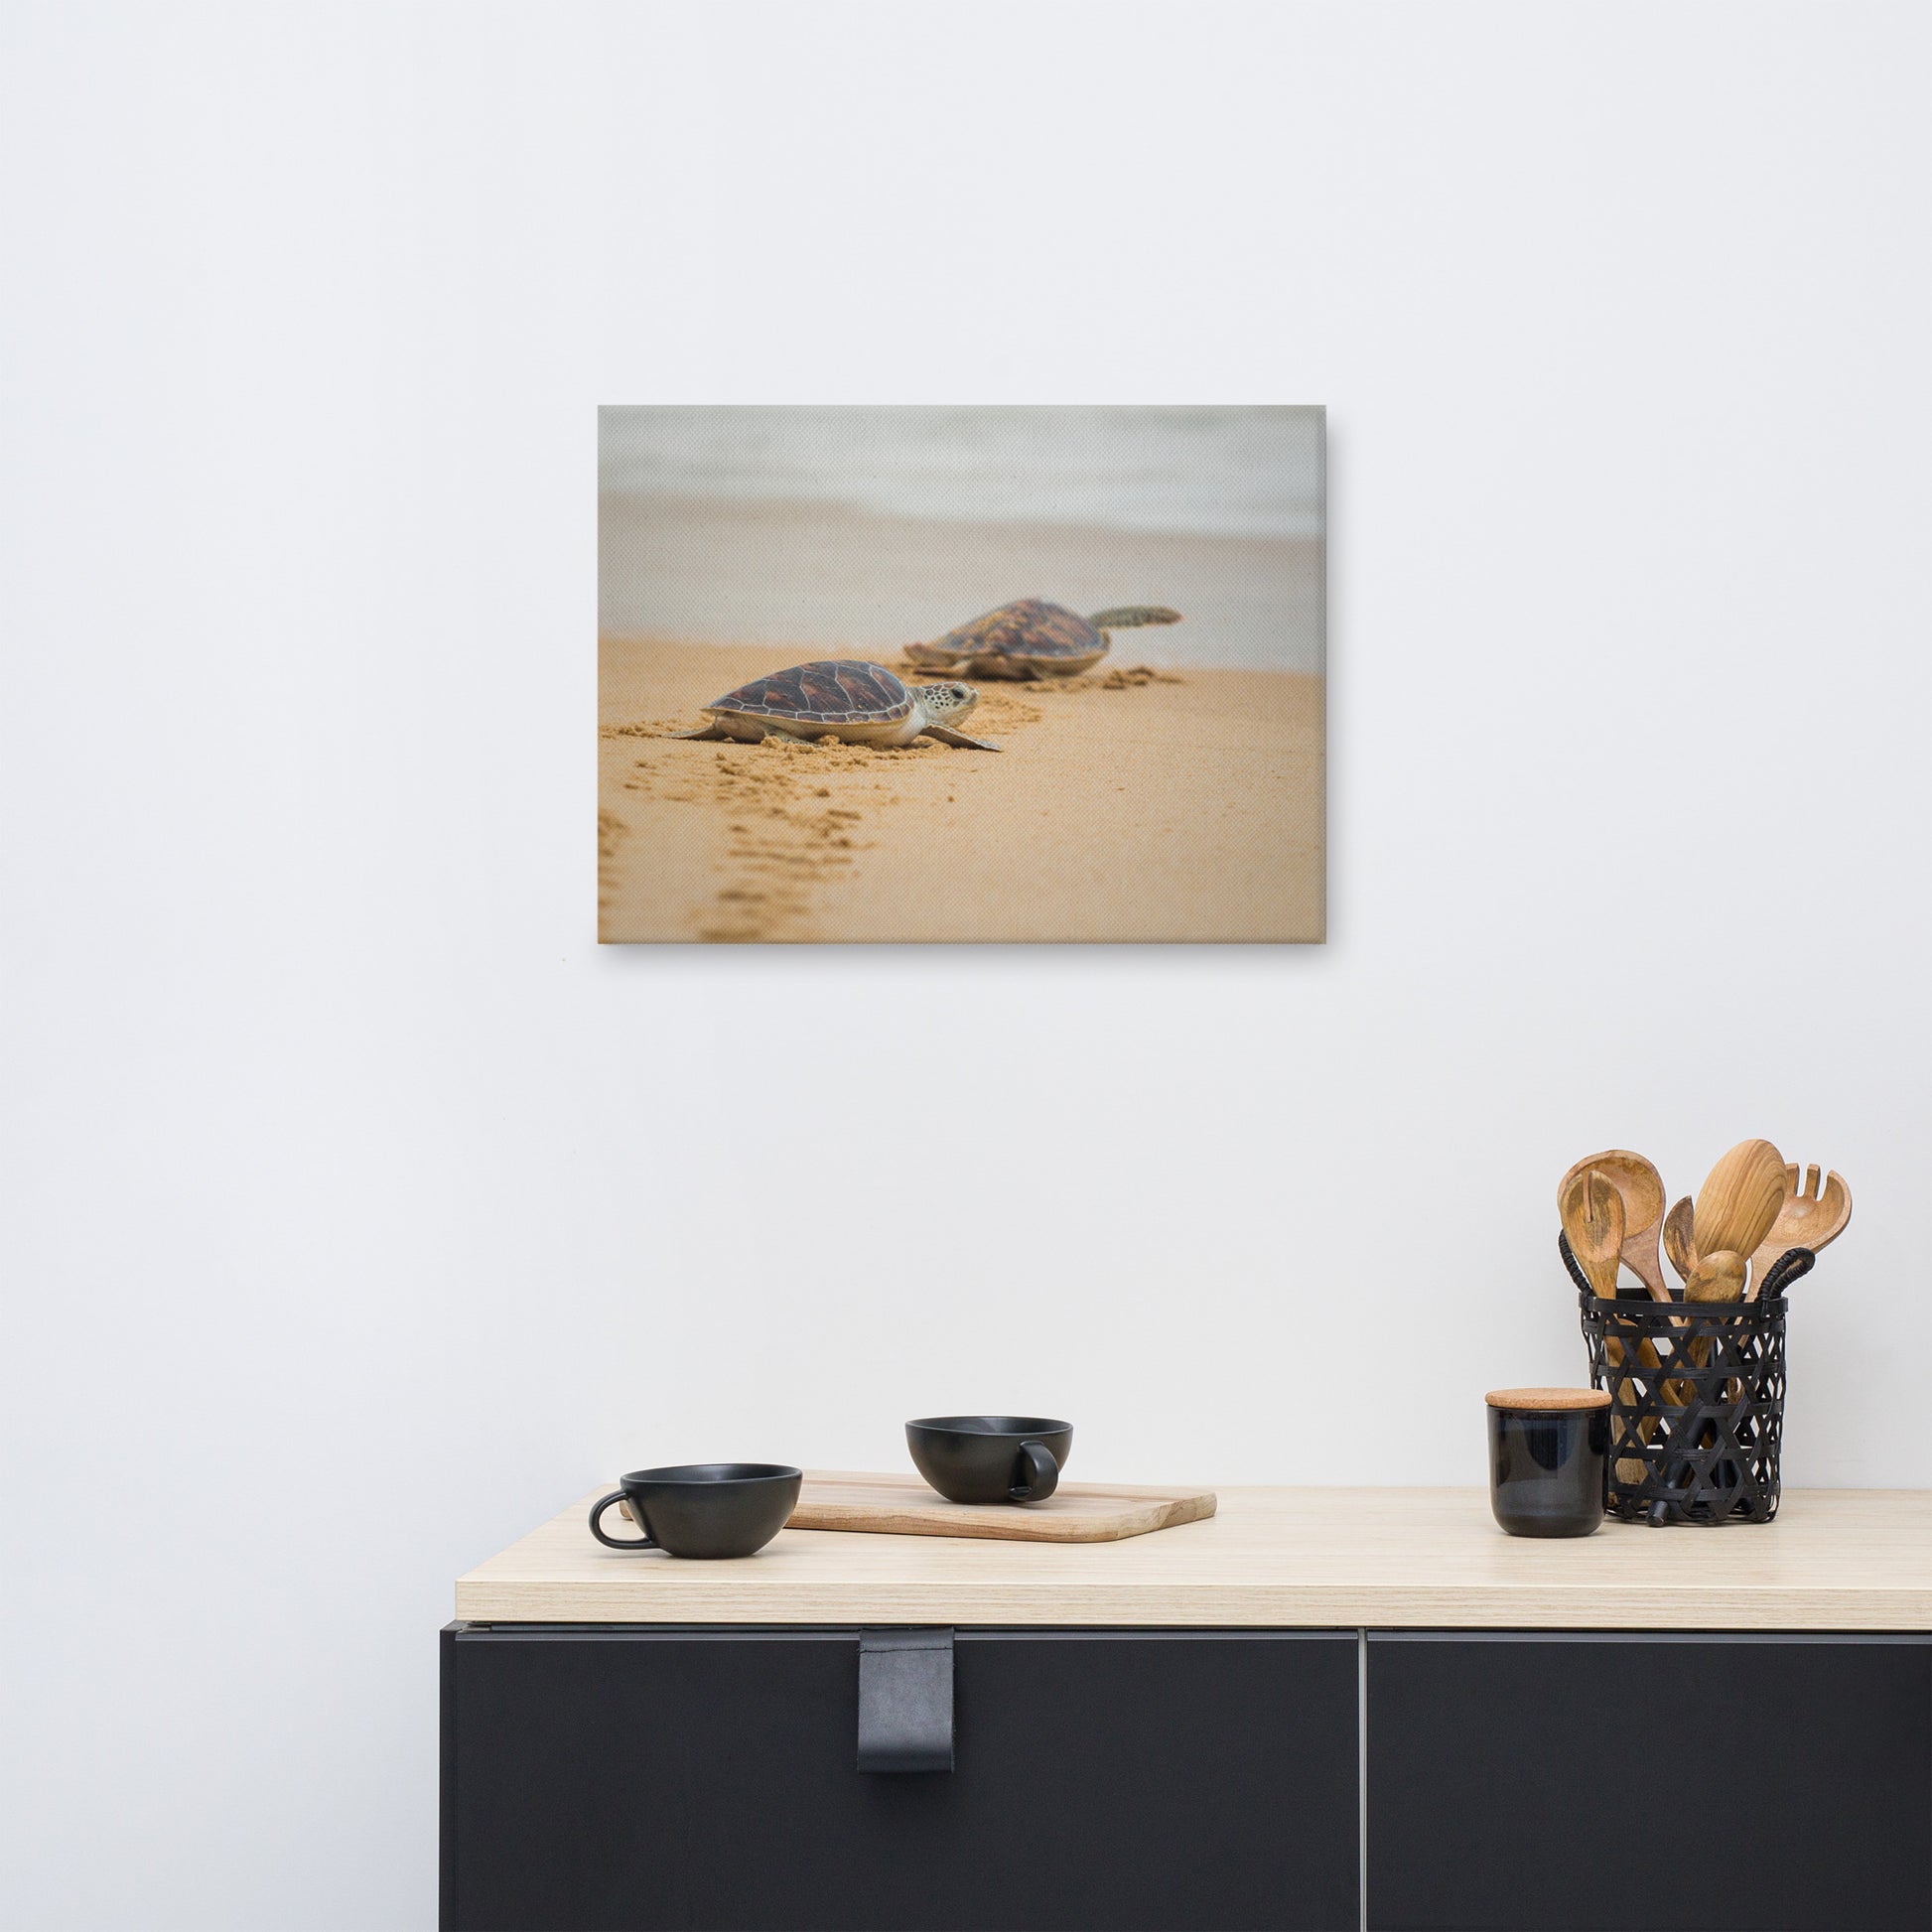 Modern Dining Room Artwork: Hawksbill Sea Turtle Hatchlings at the Shore - Coastal / Wildlife / Marine Animal / Nature Photograph Canvas Wall Art Print - Artwork